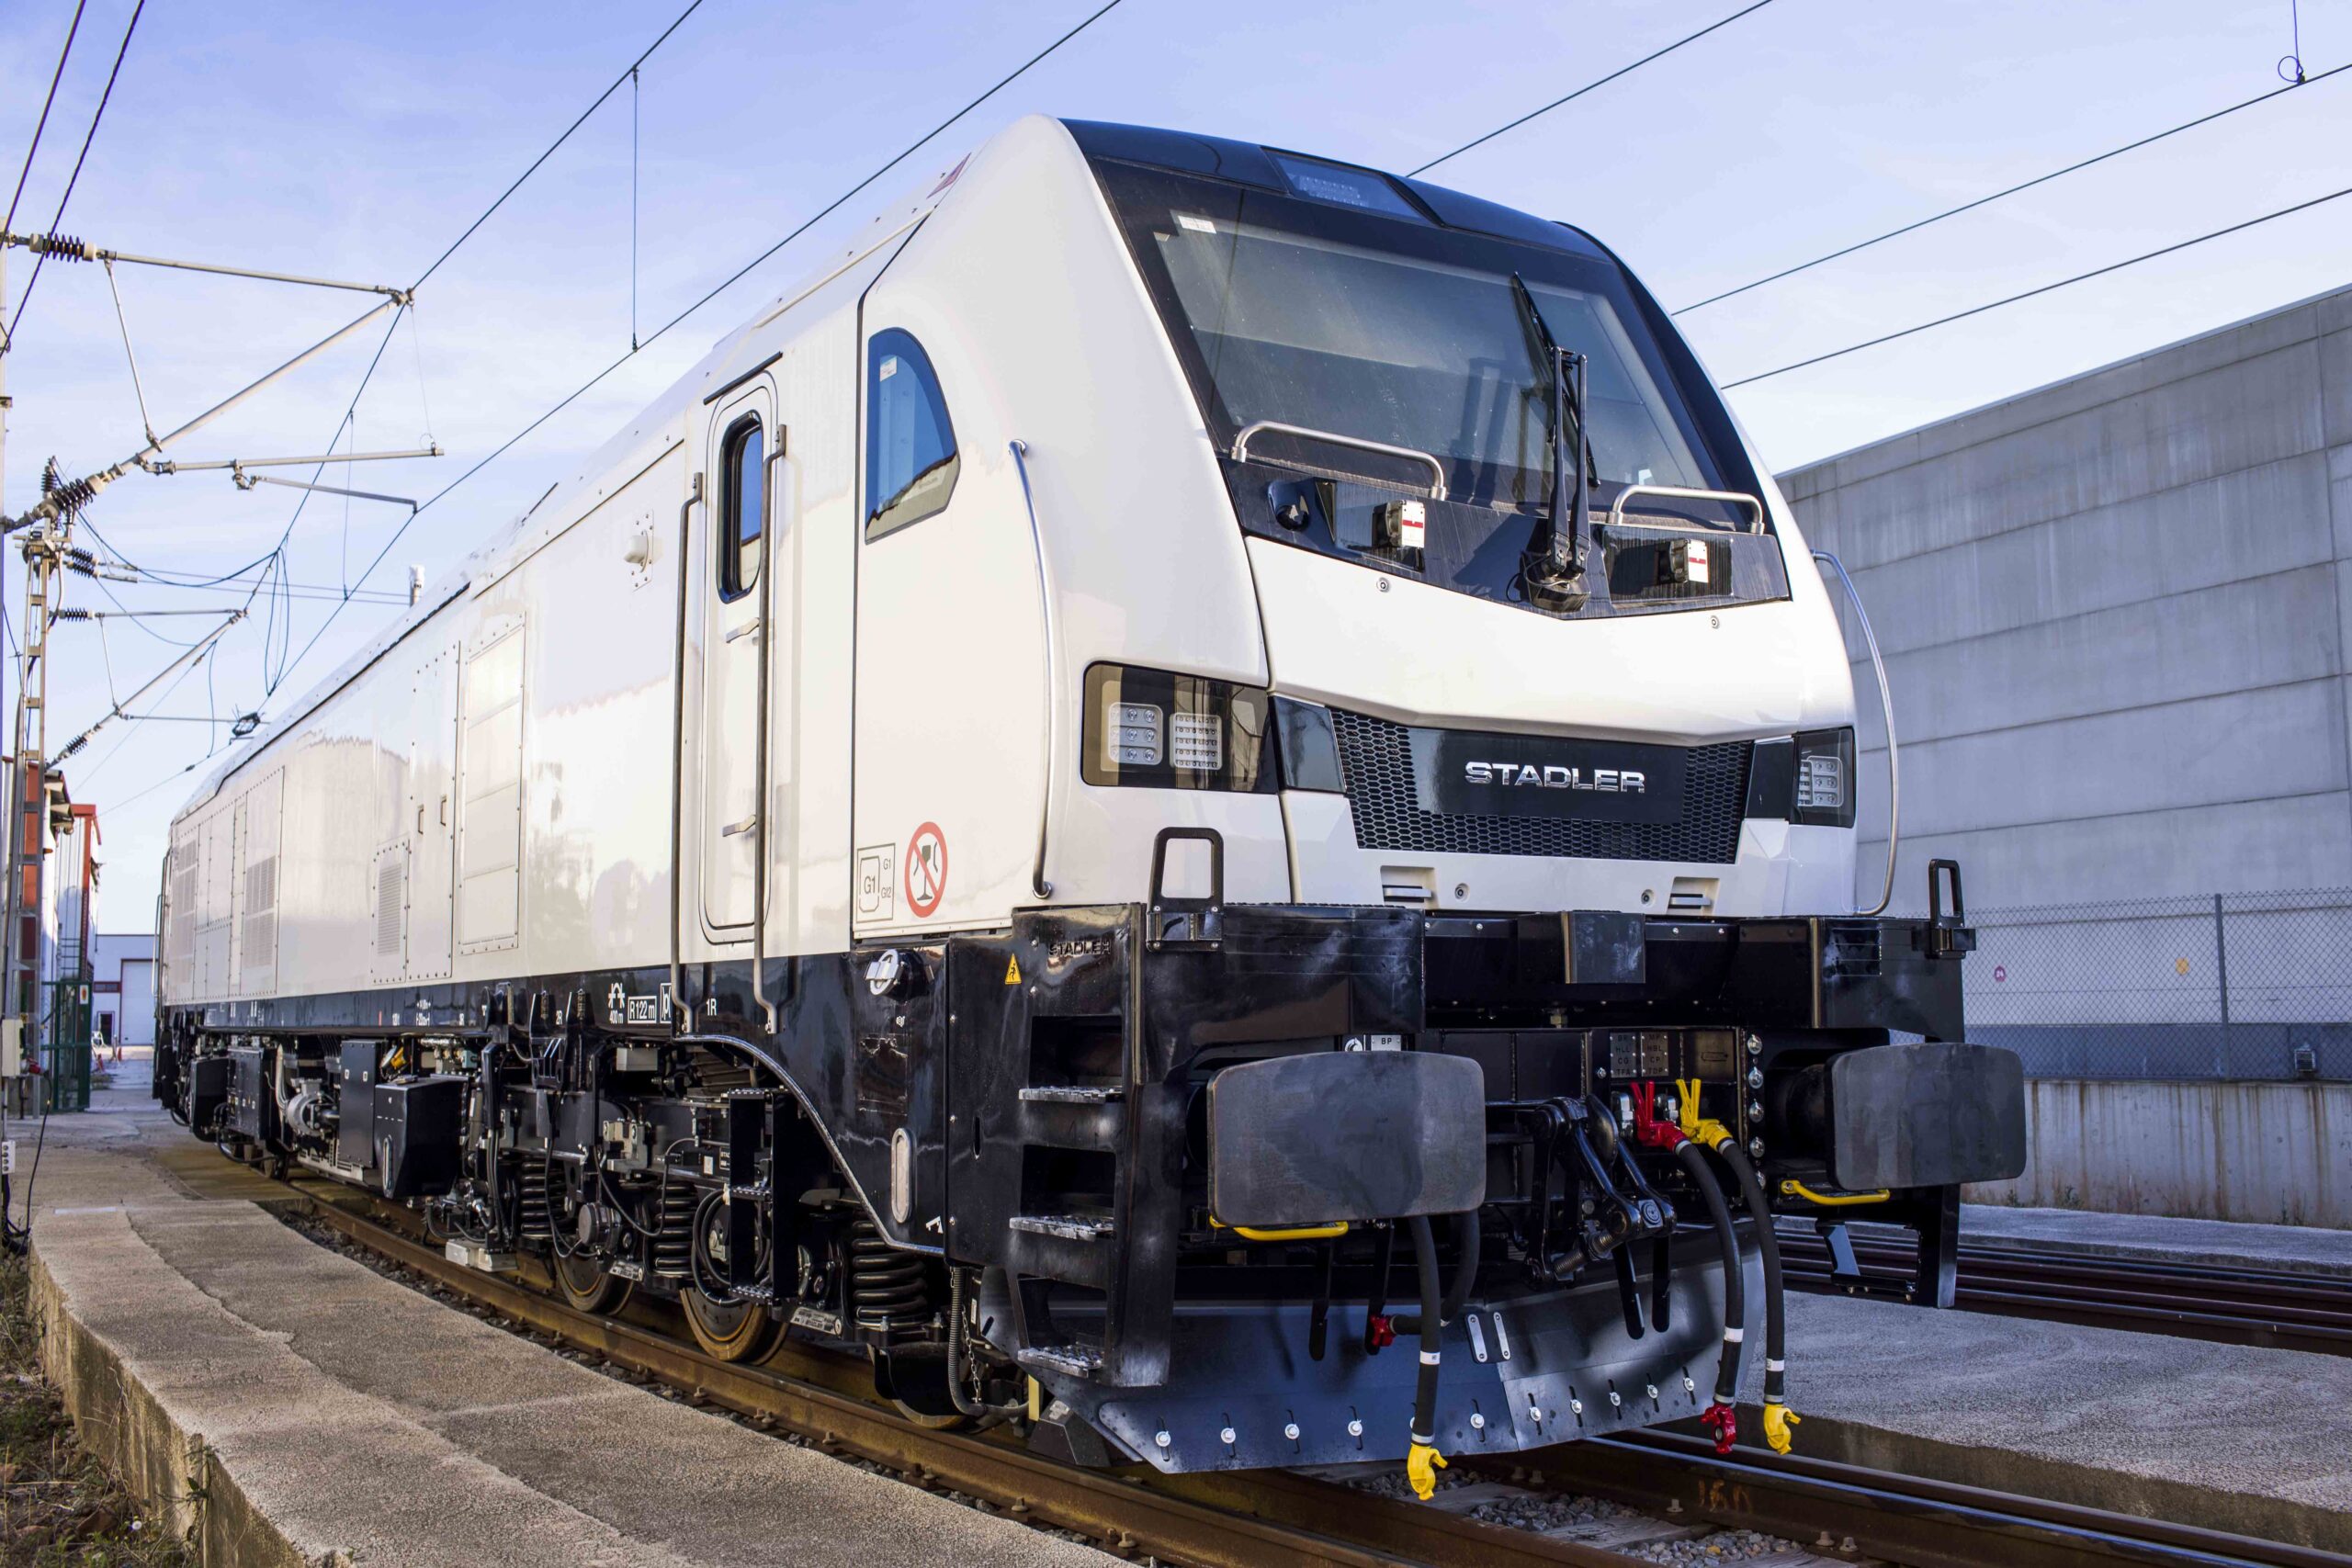 The EURO9000 locomotive from Stadler